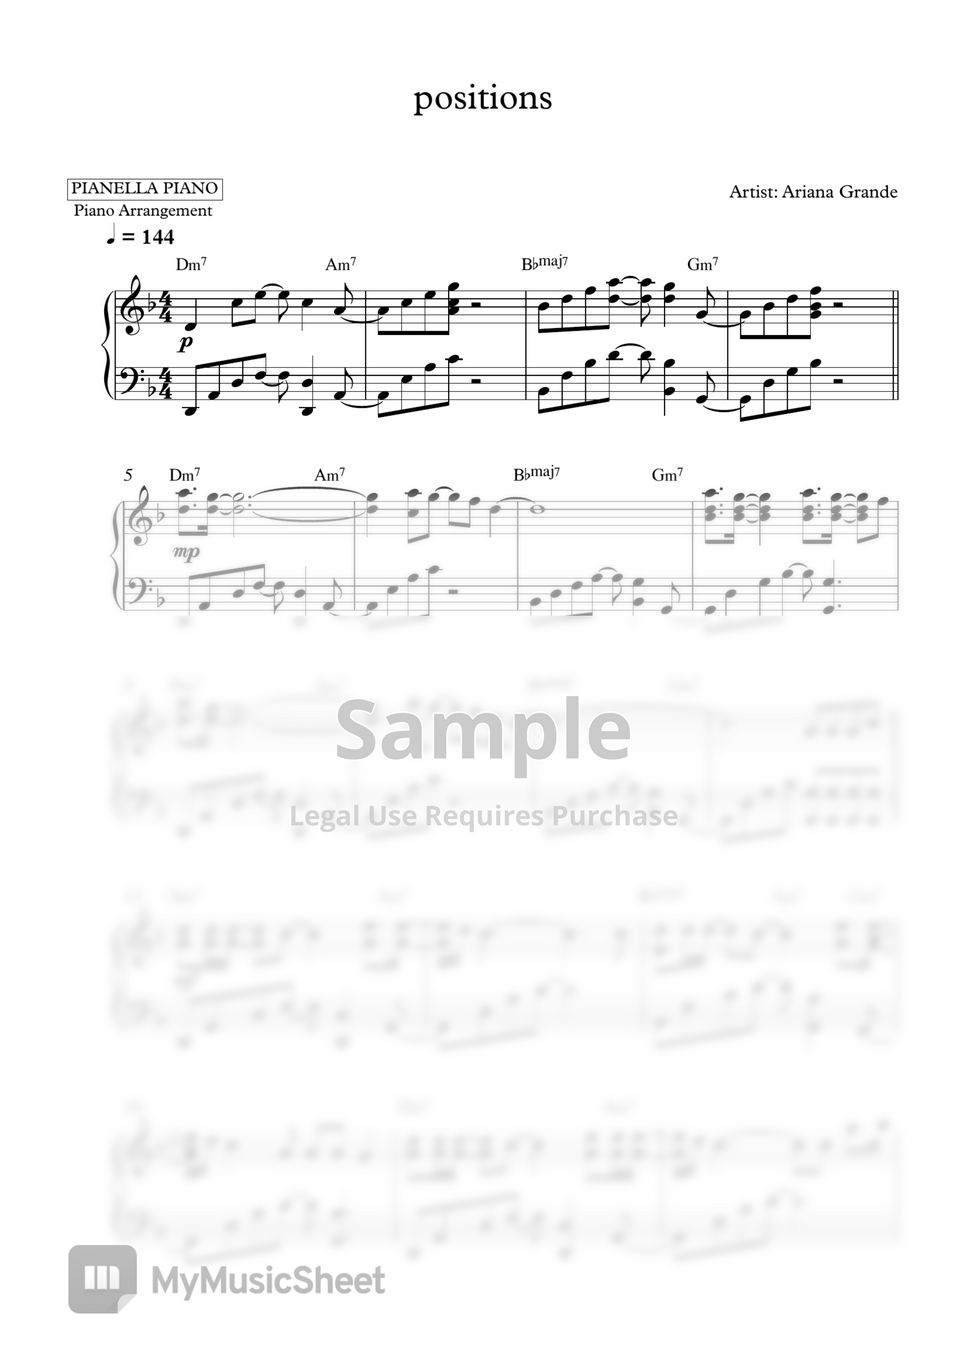 Ariana Grande - positions (Piano Sheet) by Pianella Piano